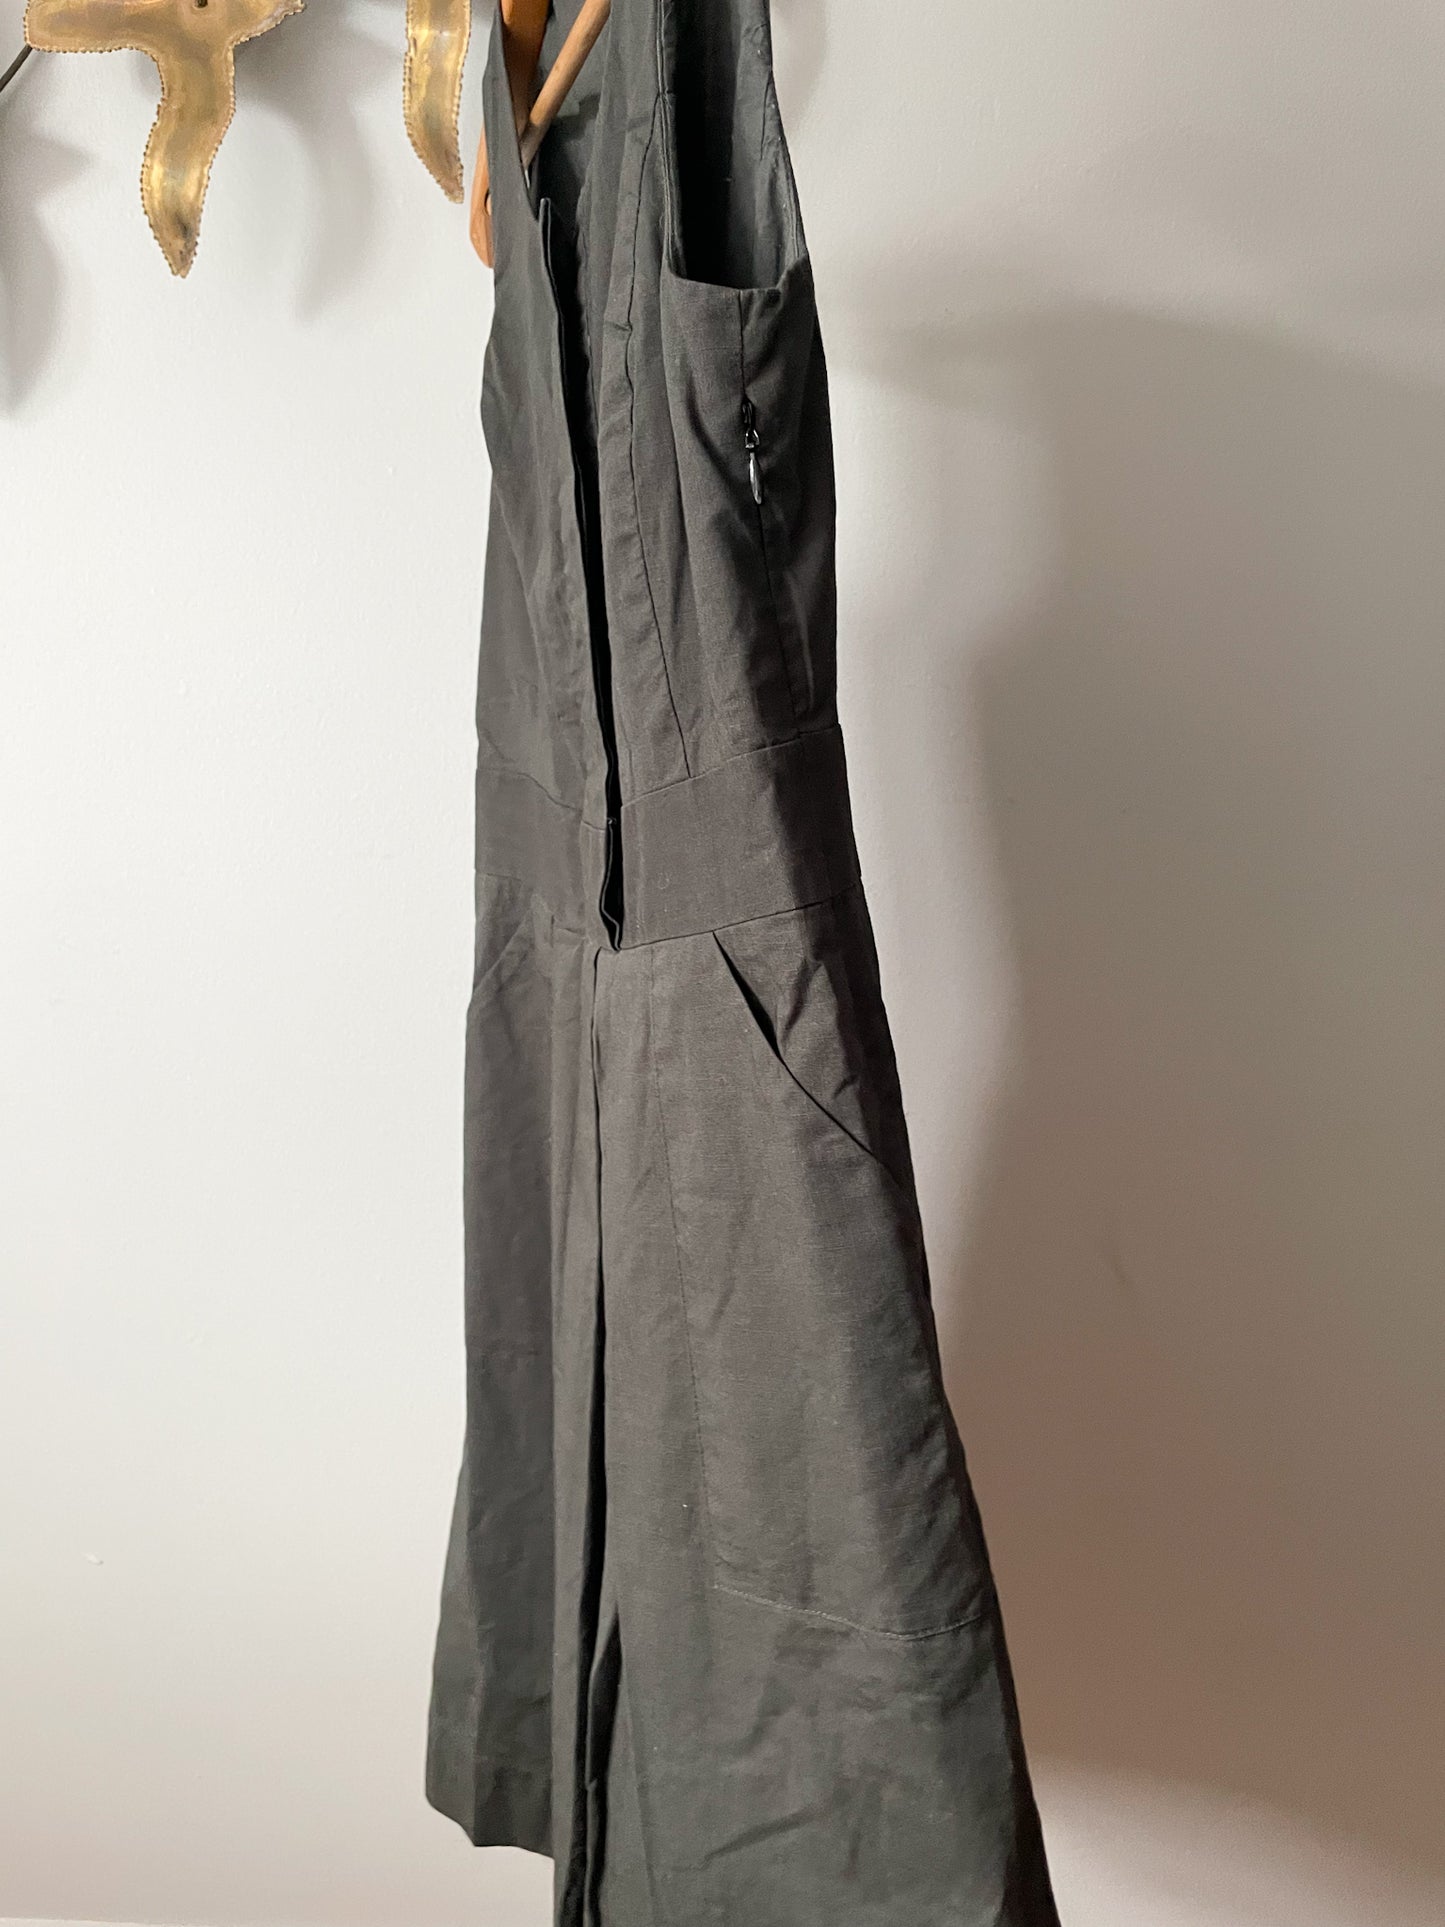 J. Crew Grey 100% Cotton Fit Flare Dress - Size 00